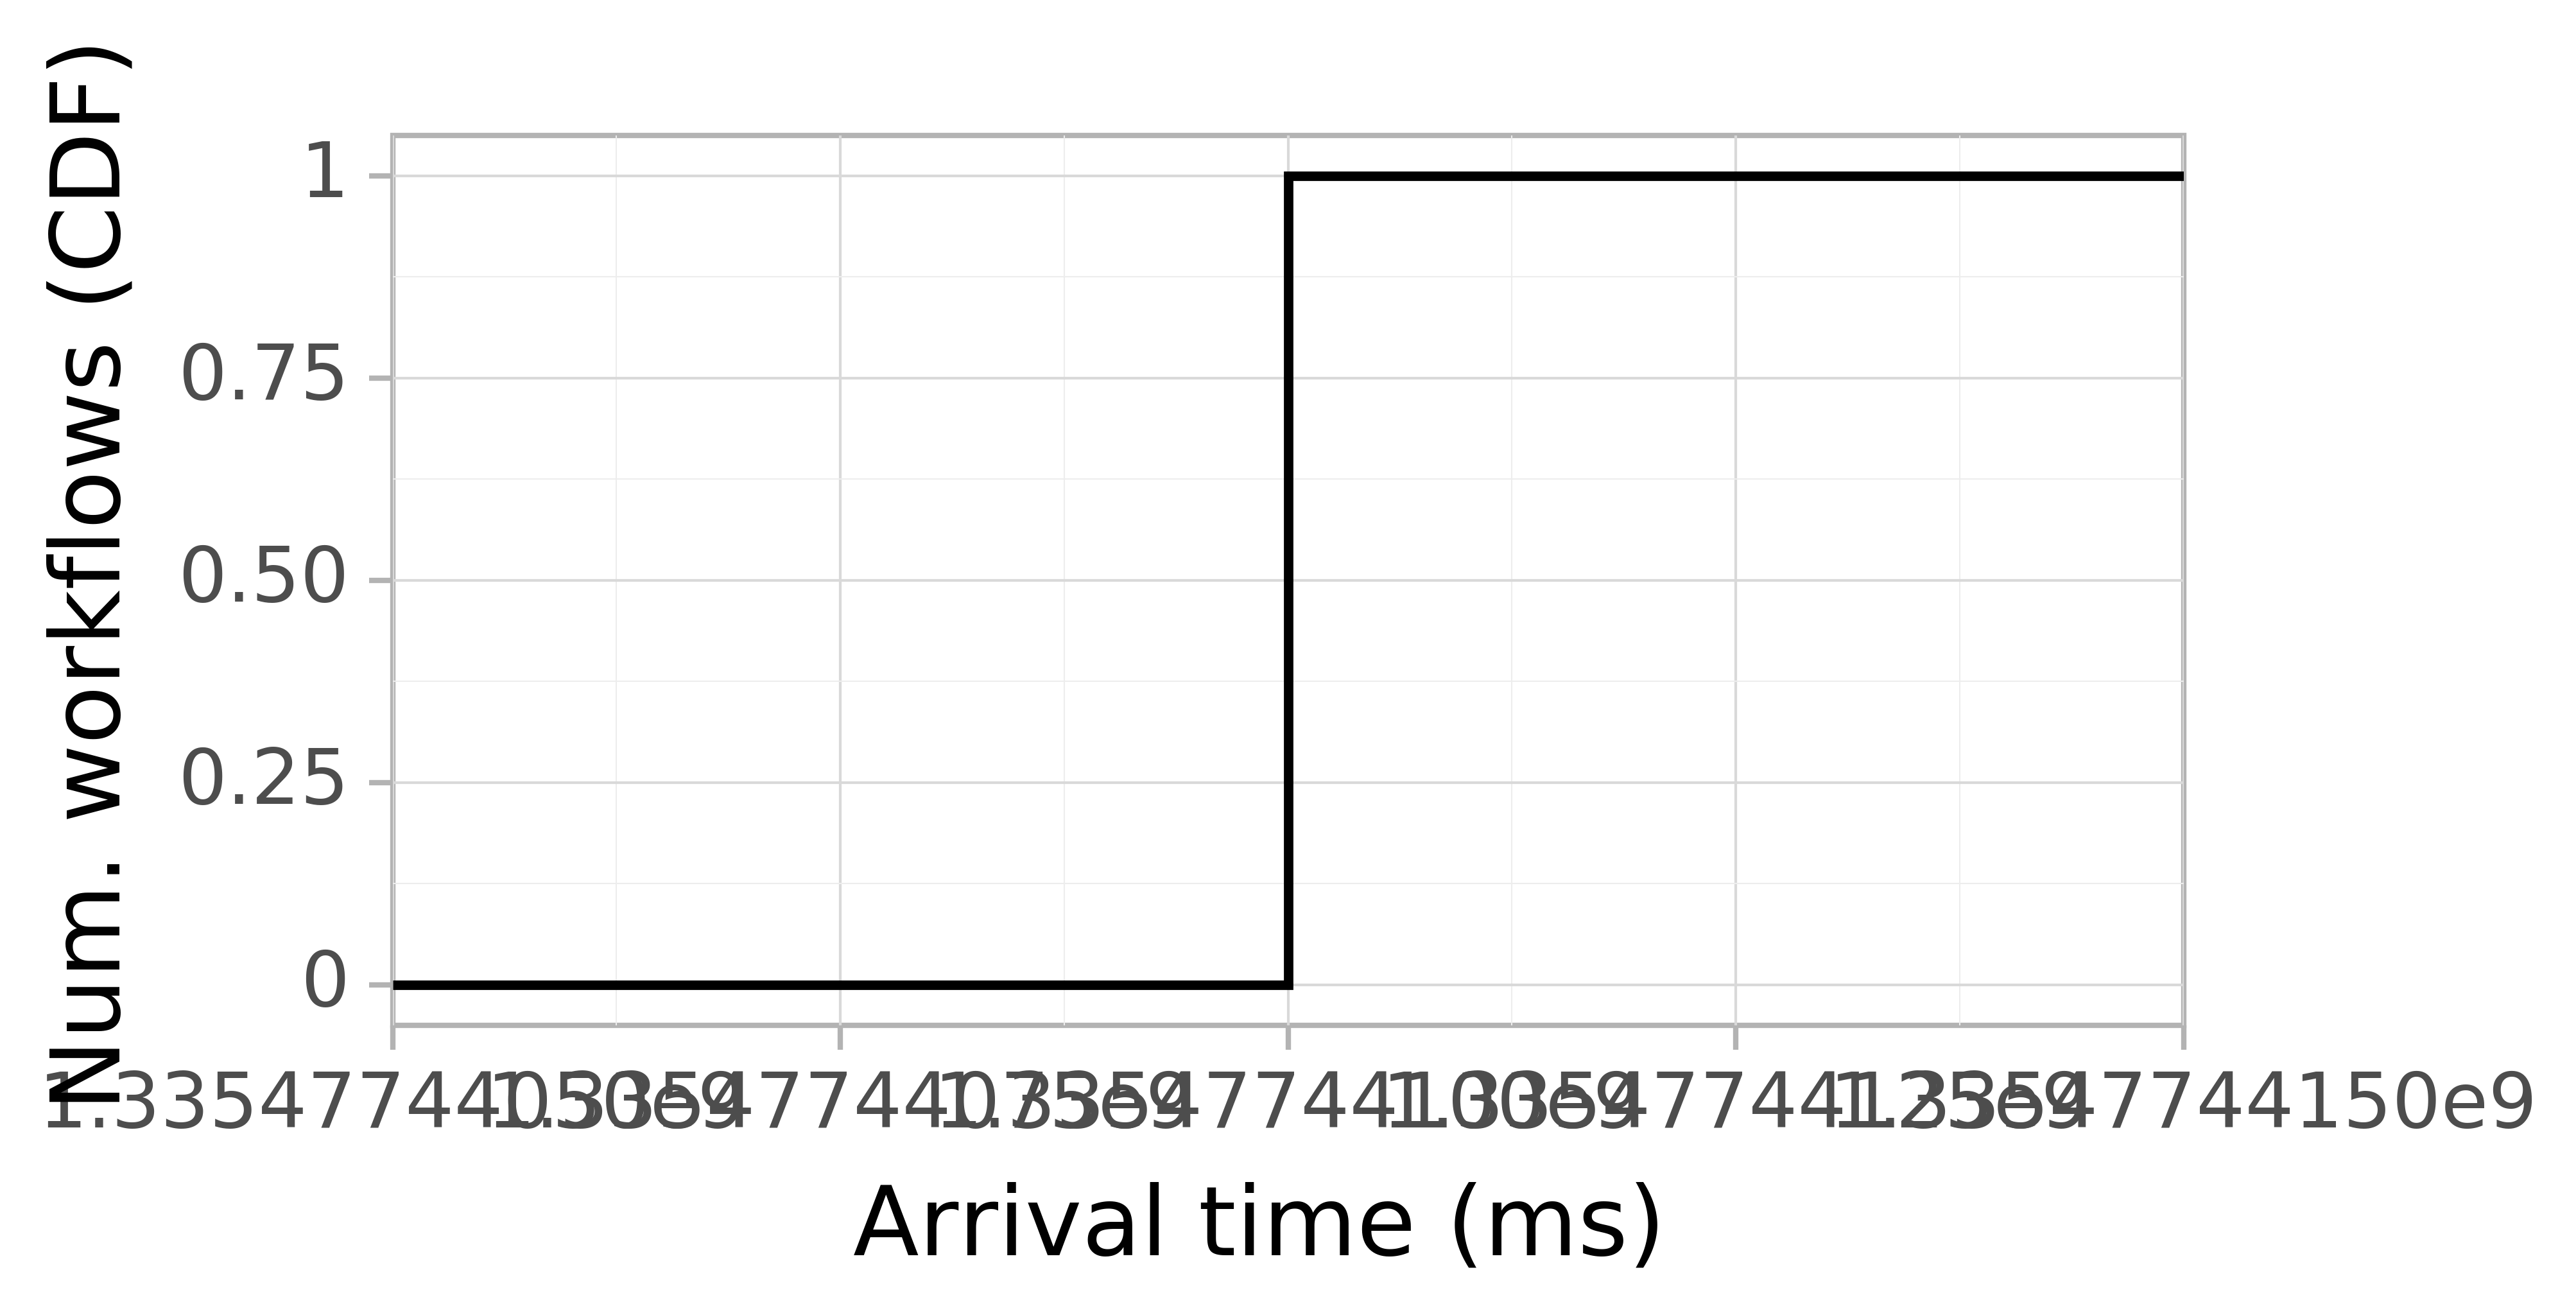 Job arrival CDF graph for the Pegasus_P6a trace.